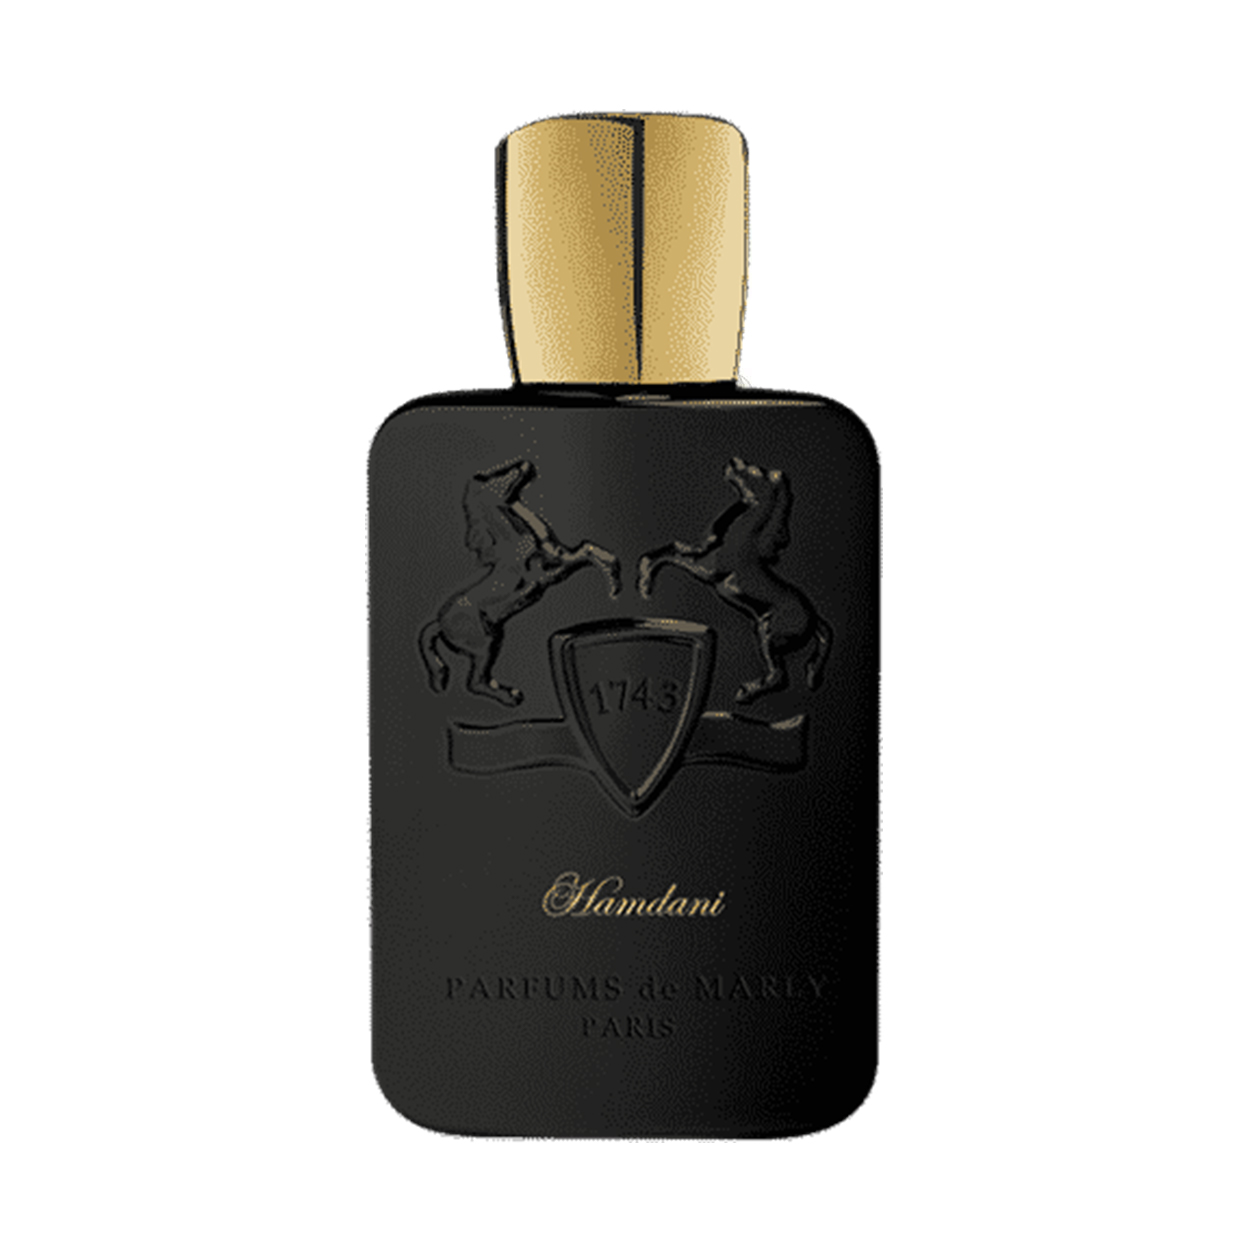 Parfums de Marly Hamdani Eau de parfum 125ml